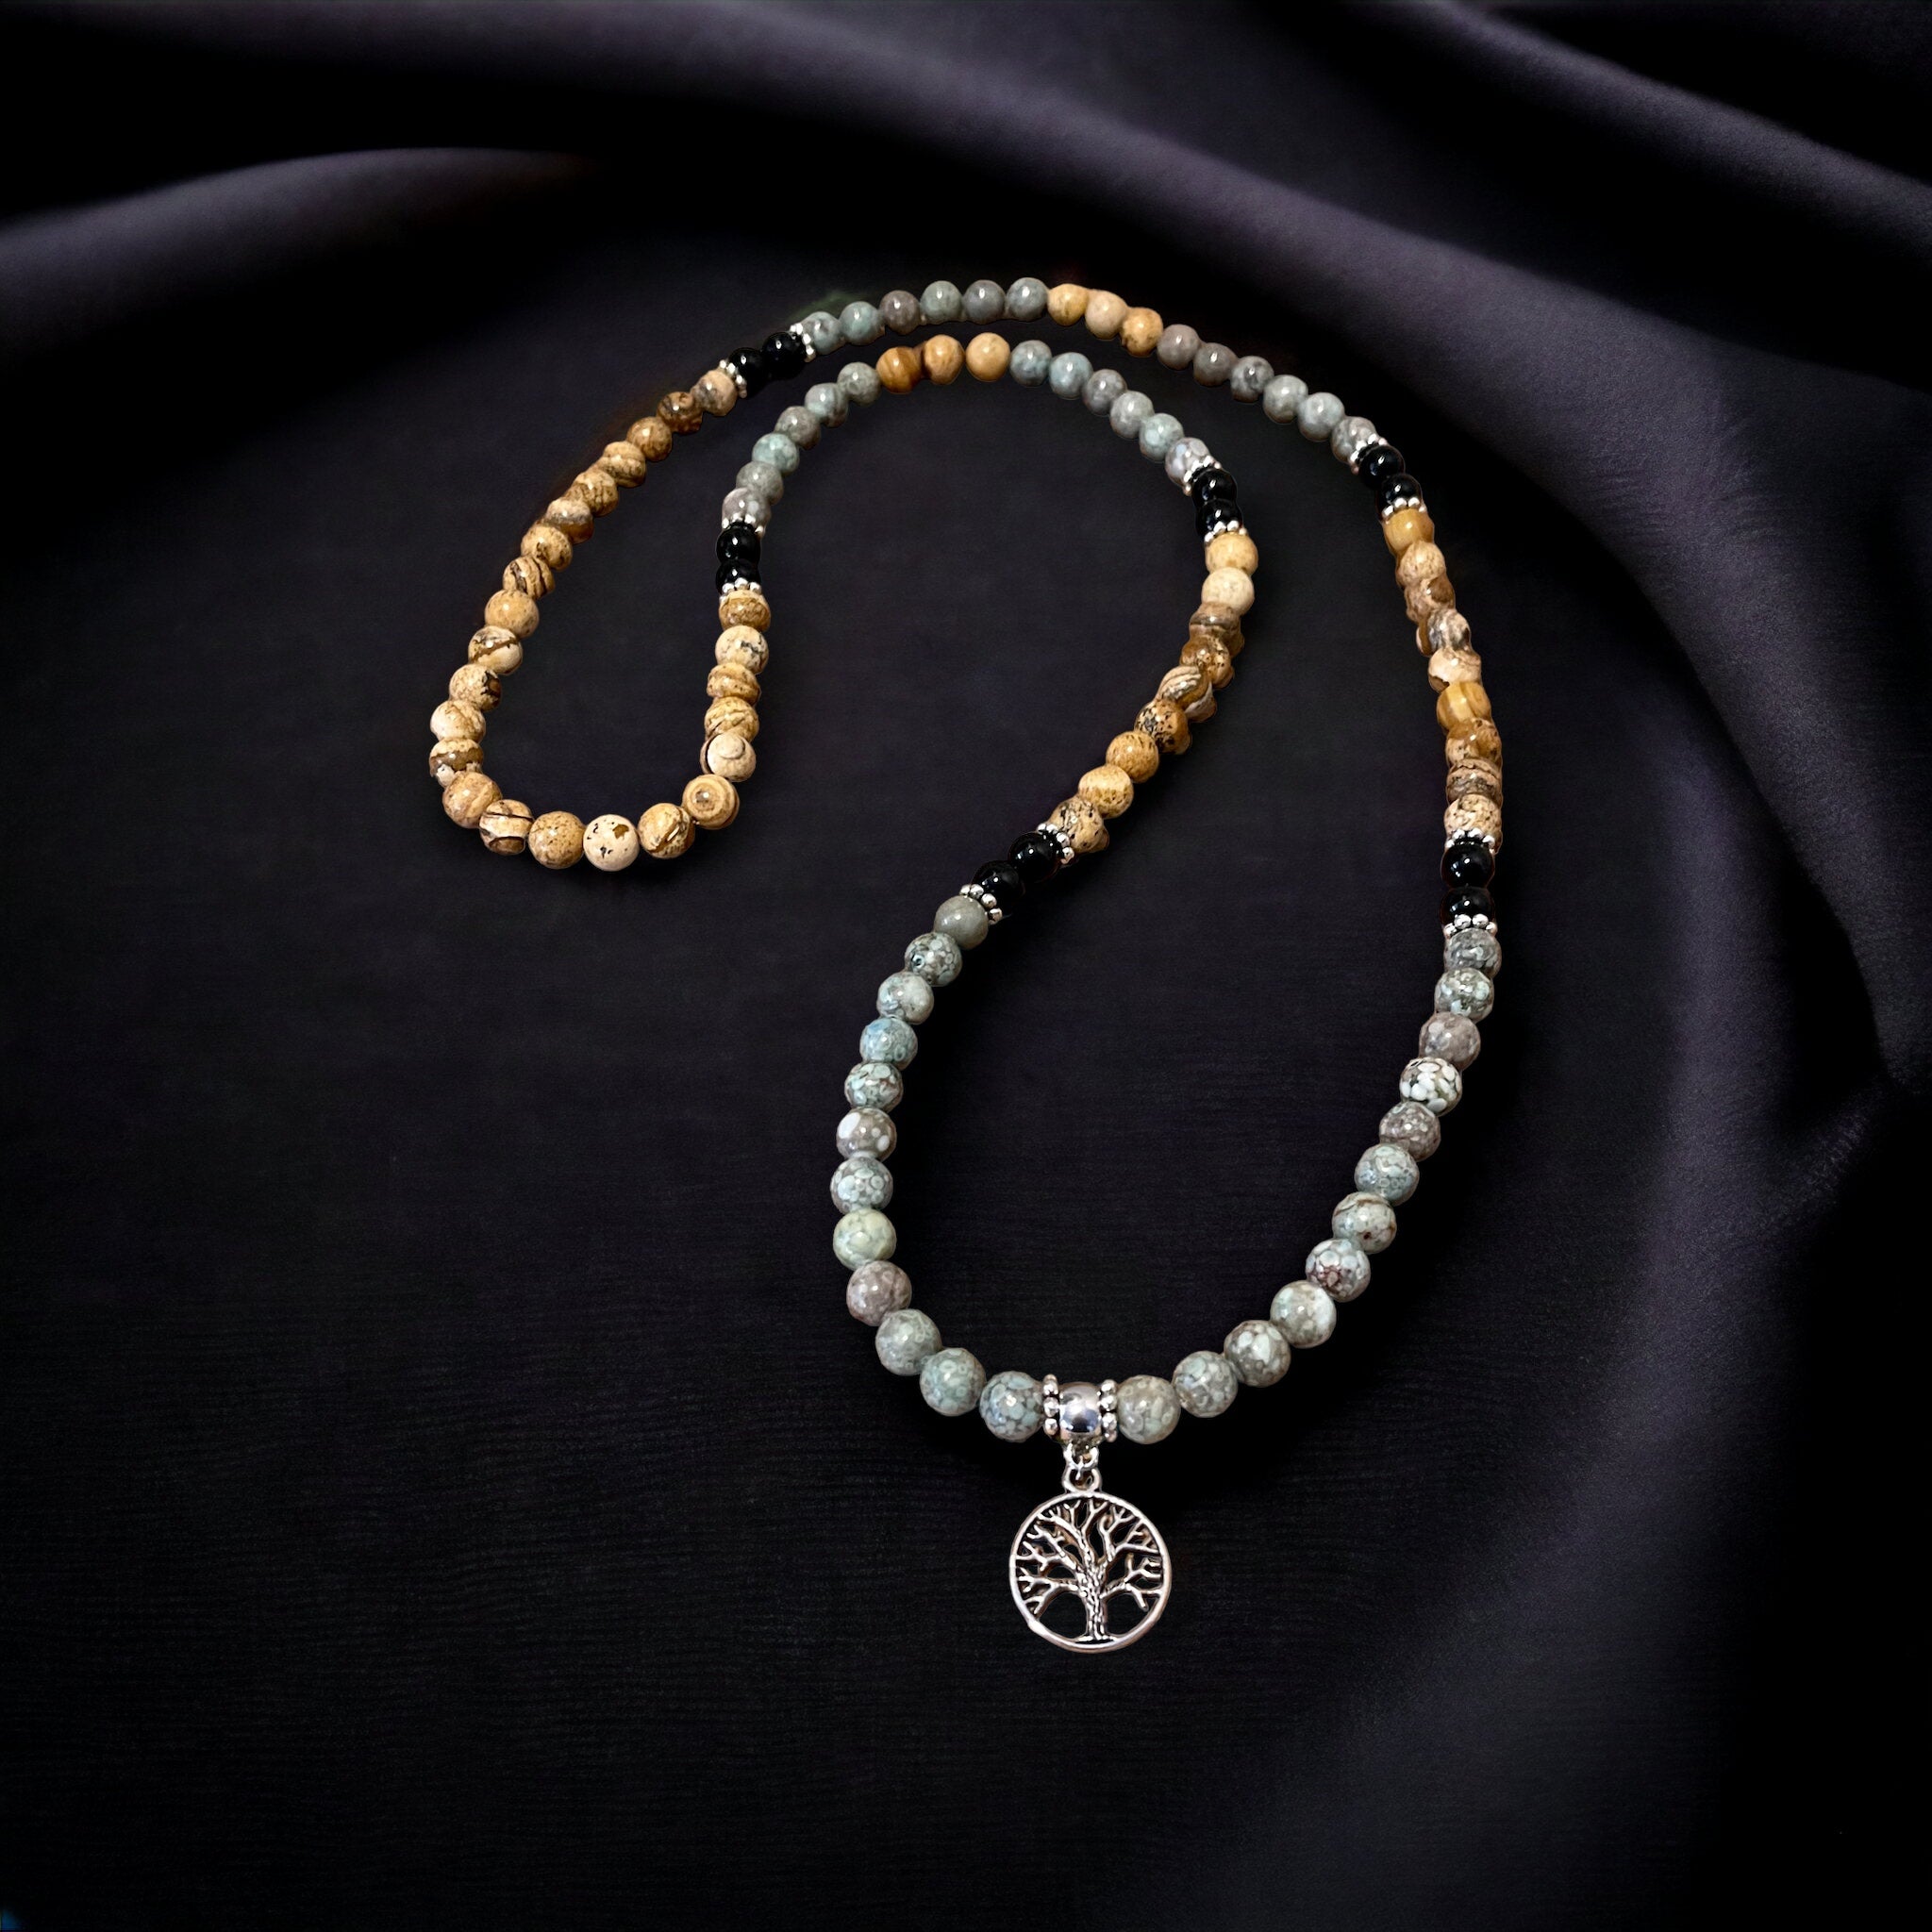 Fancy Beads - Maifanite, Onyx, Picture Jasper 108 Mala Bead Tree of Life Necklace